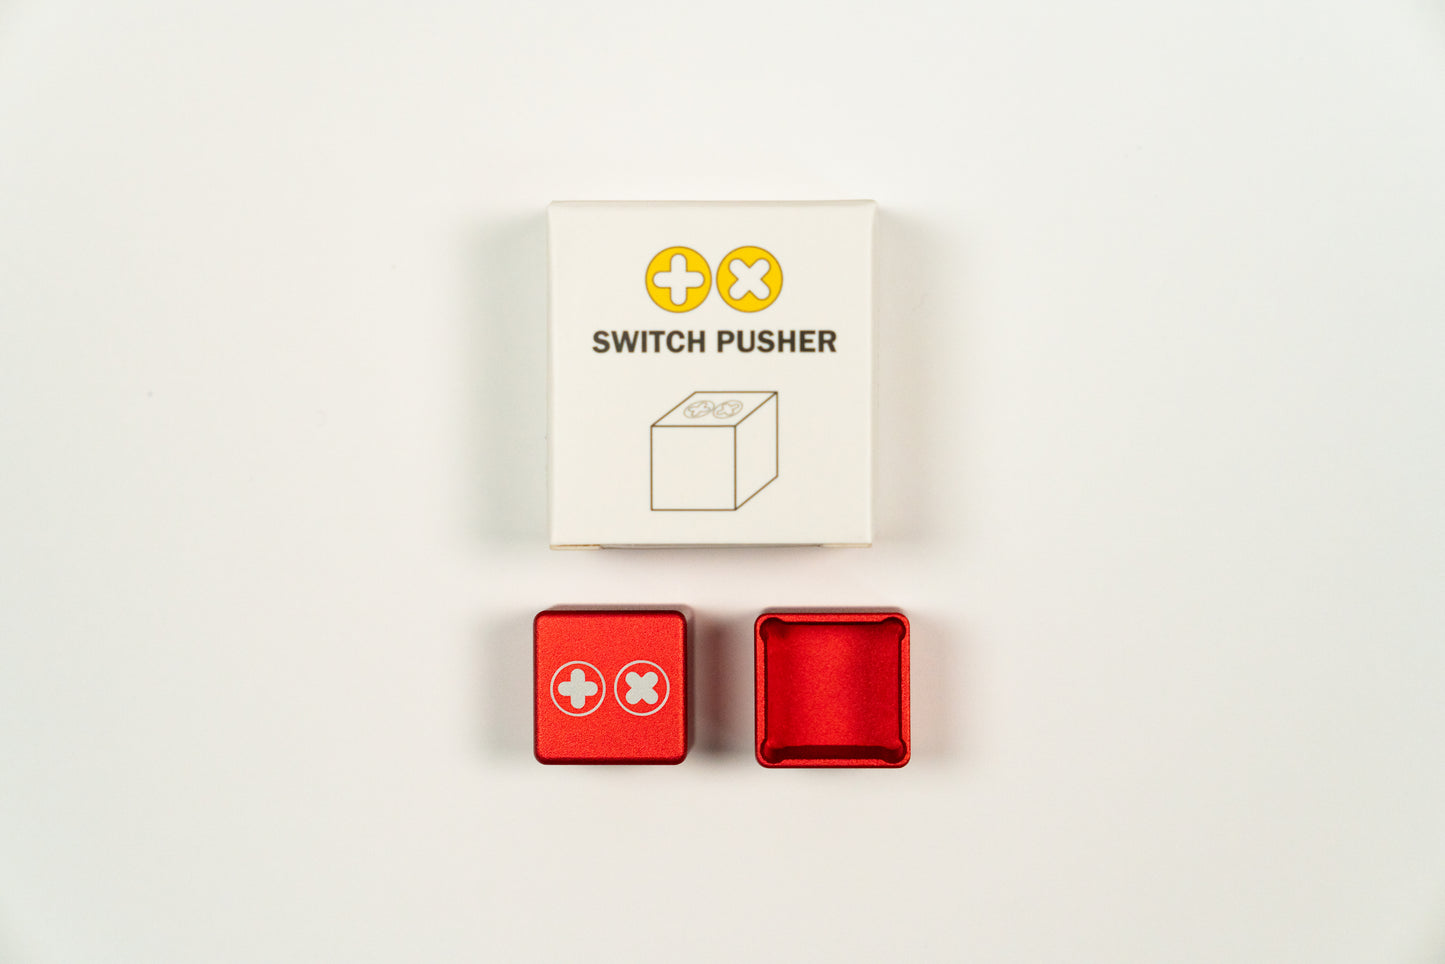 TX Switch Pusher